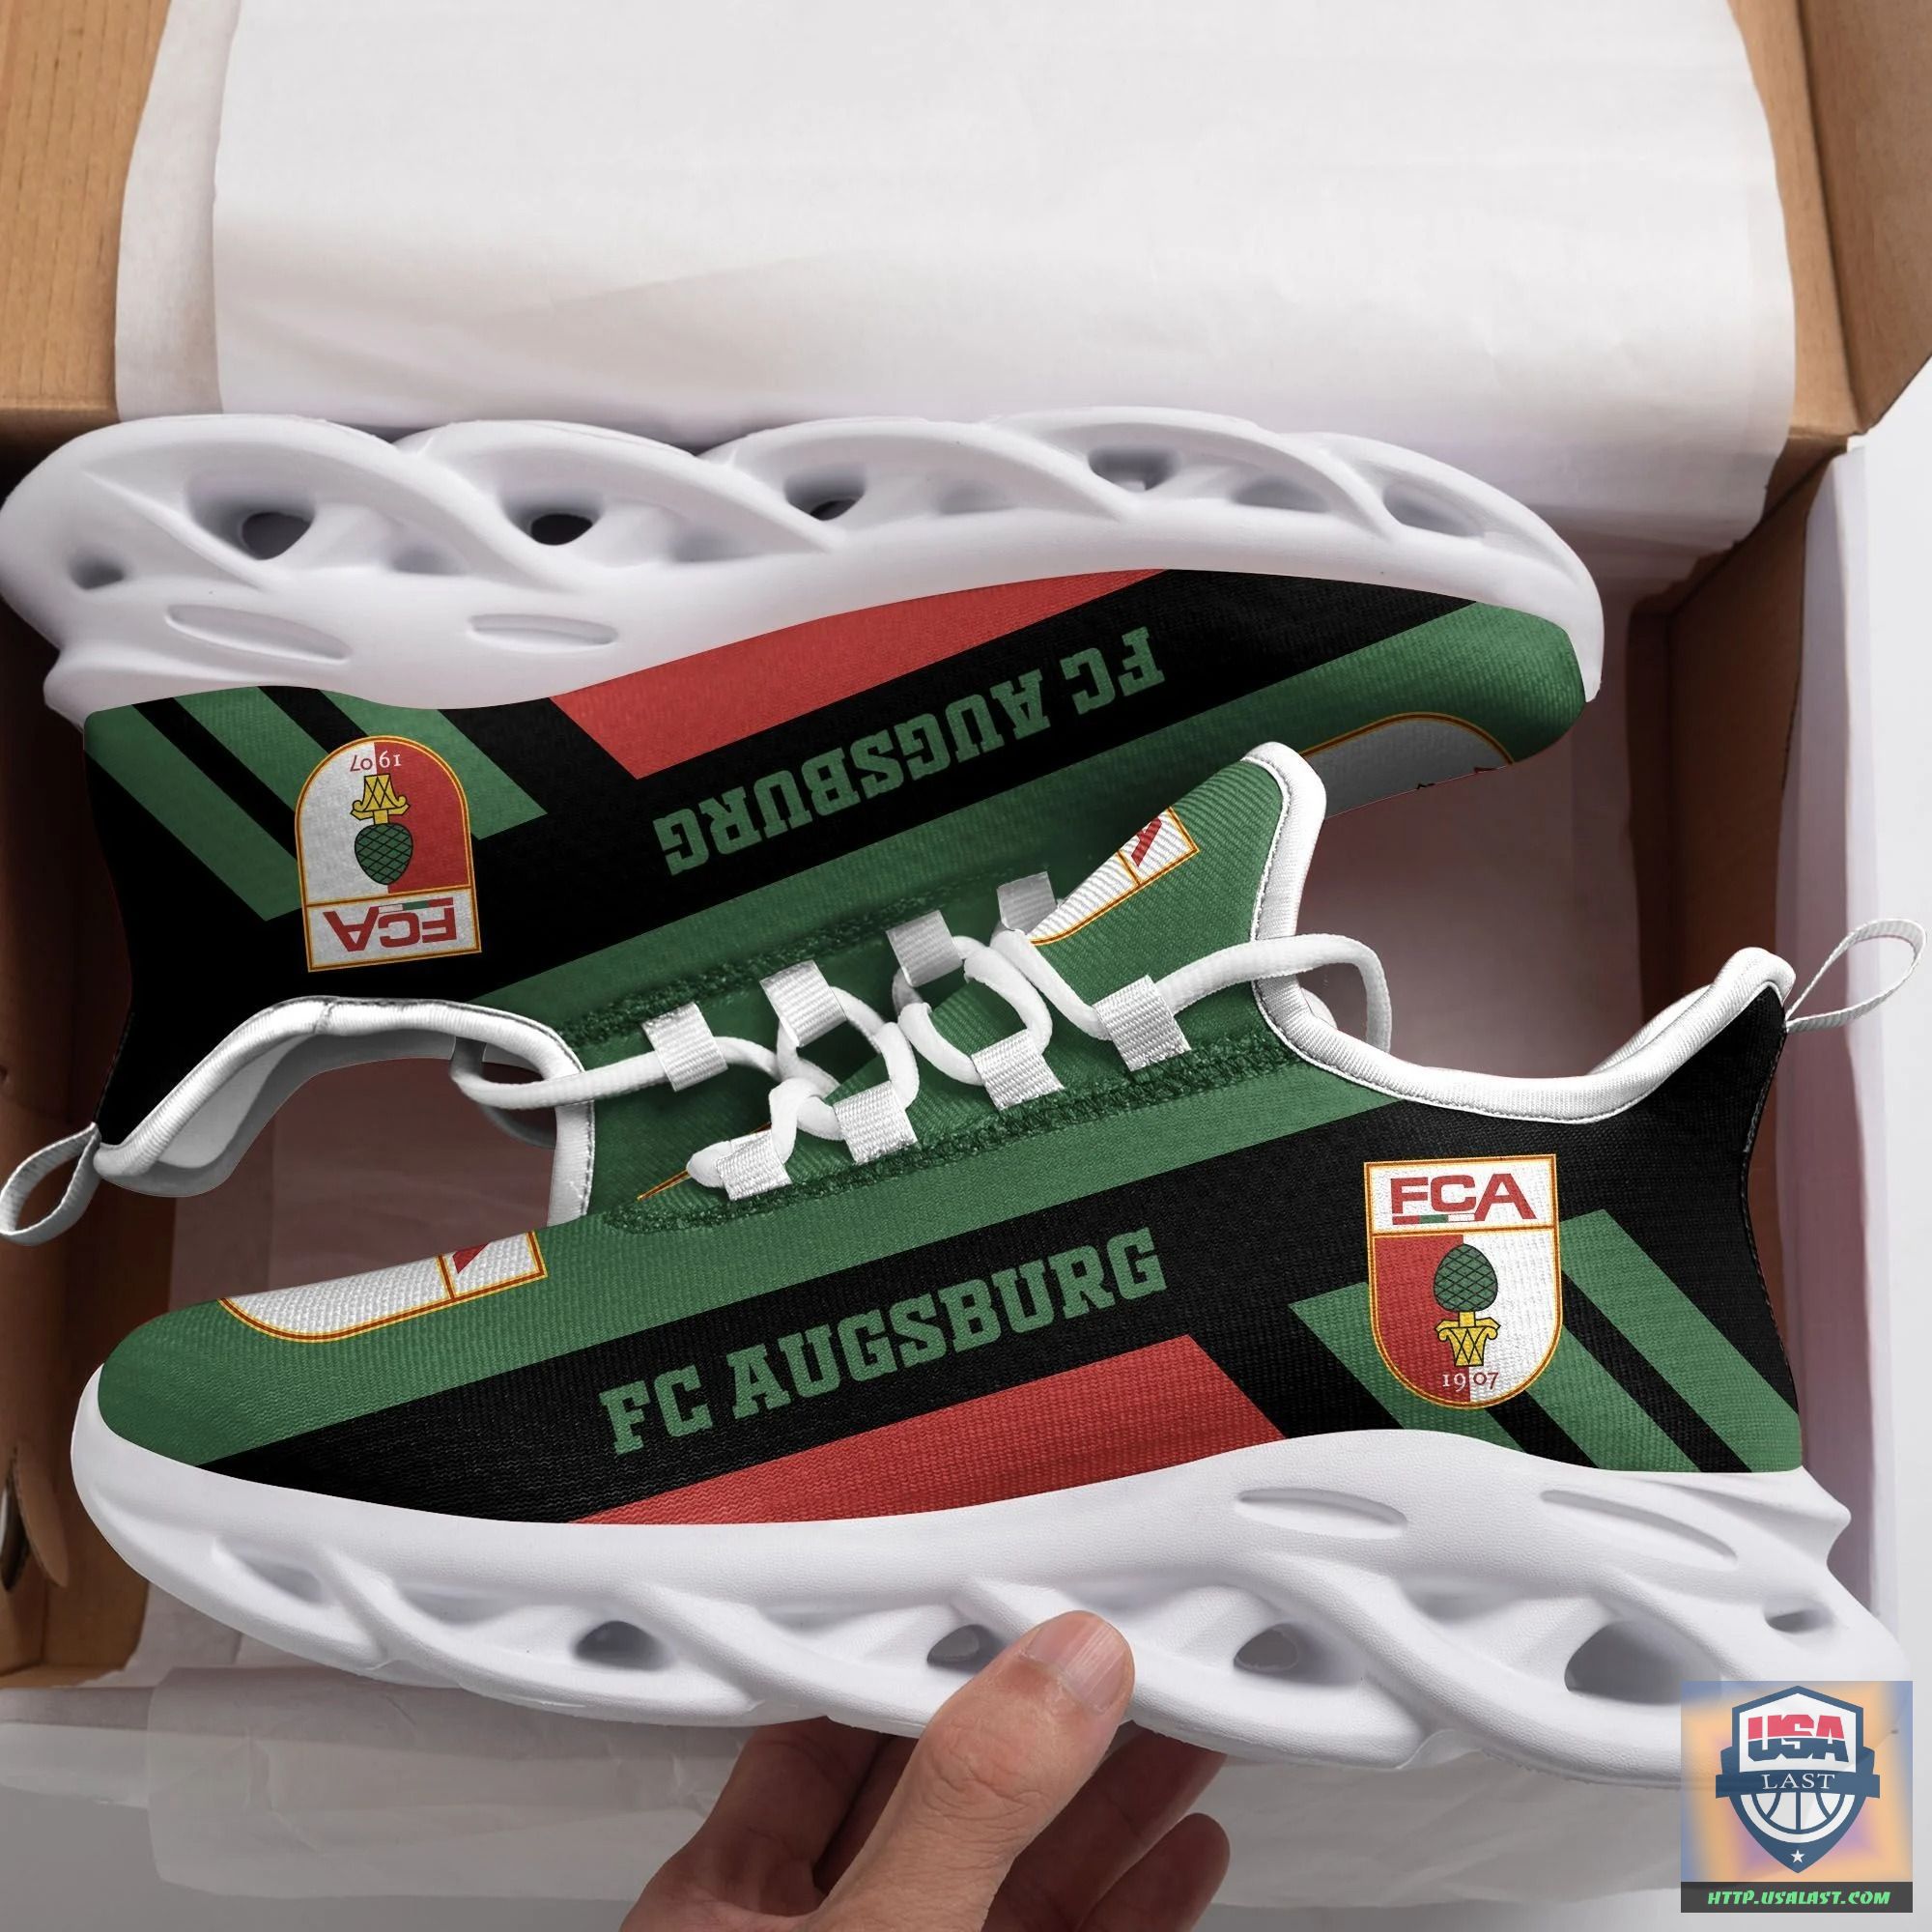 FC Augsburg Bundesliga Max Soul Shoes